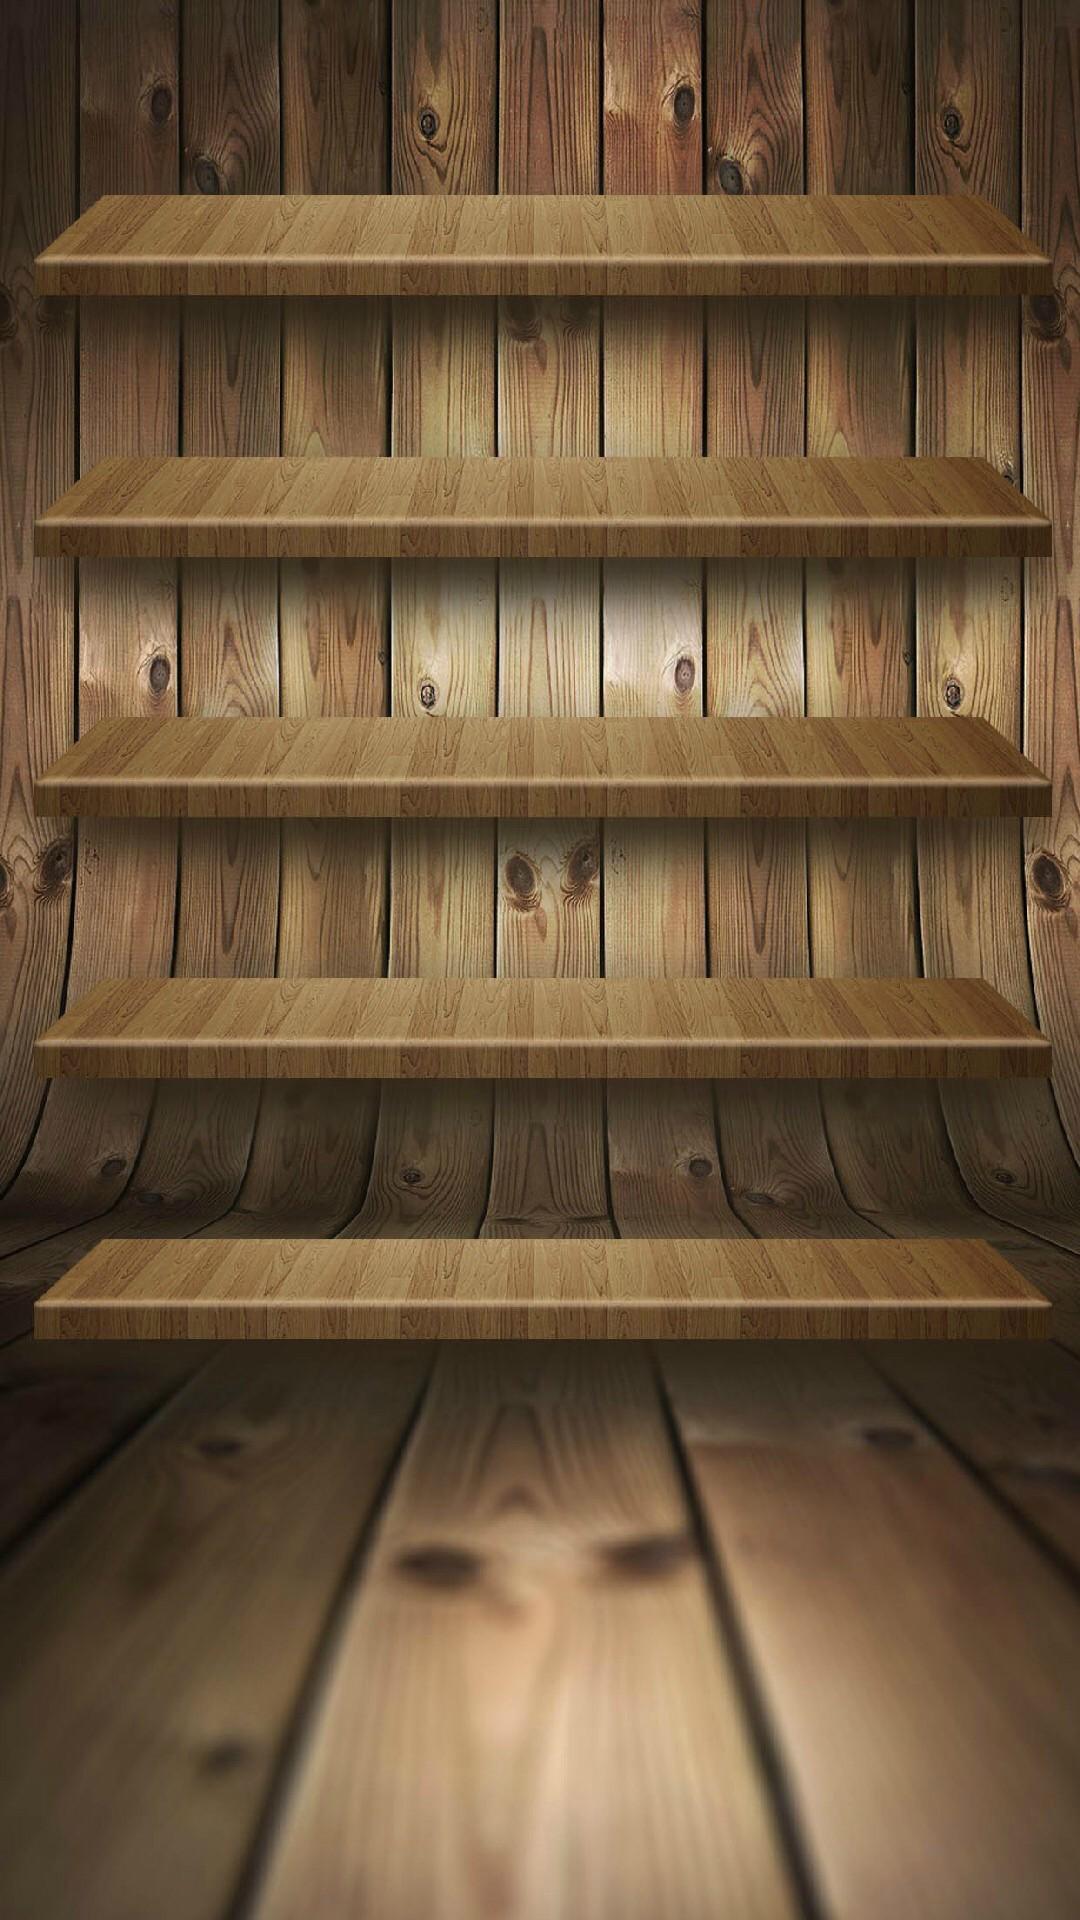 3D Wood Perspective Shelf iPhone 6 Plus HD Wallpaper